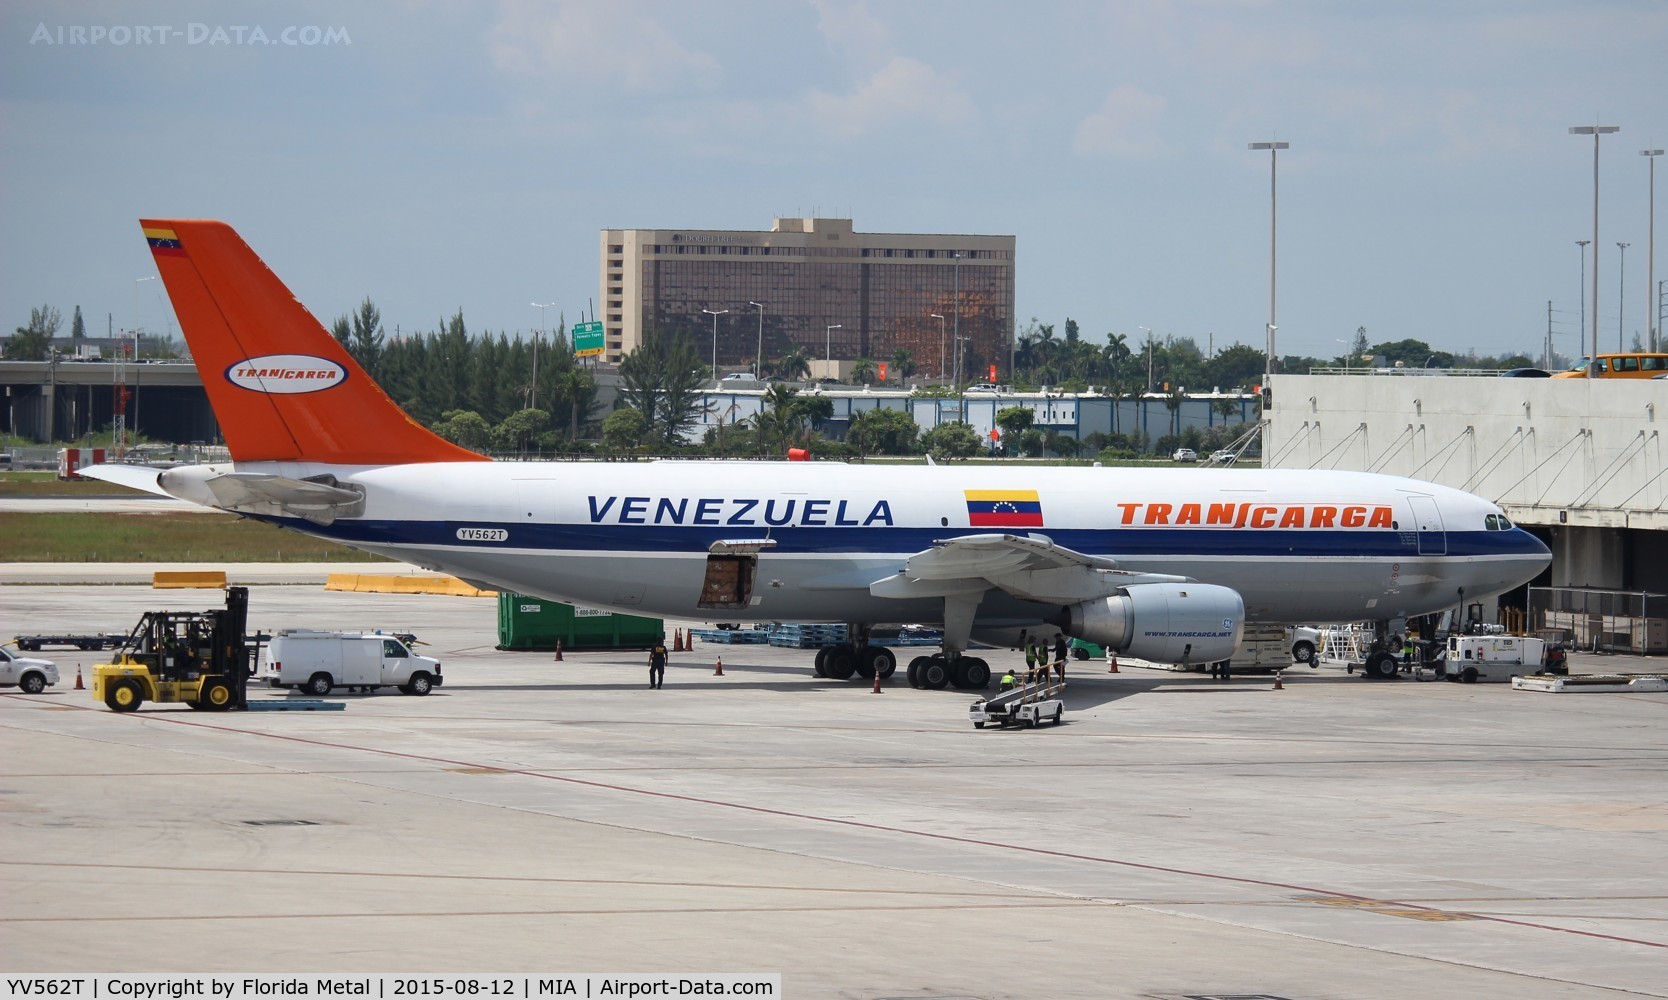 YV562T, 1983 Airbus A300B4-203(F) C/N 274, Transcarga Venezuela in VIASA's retro colors